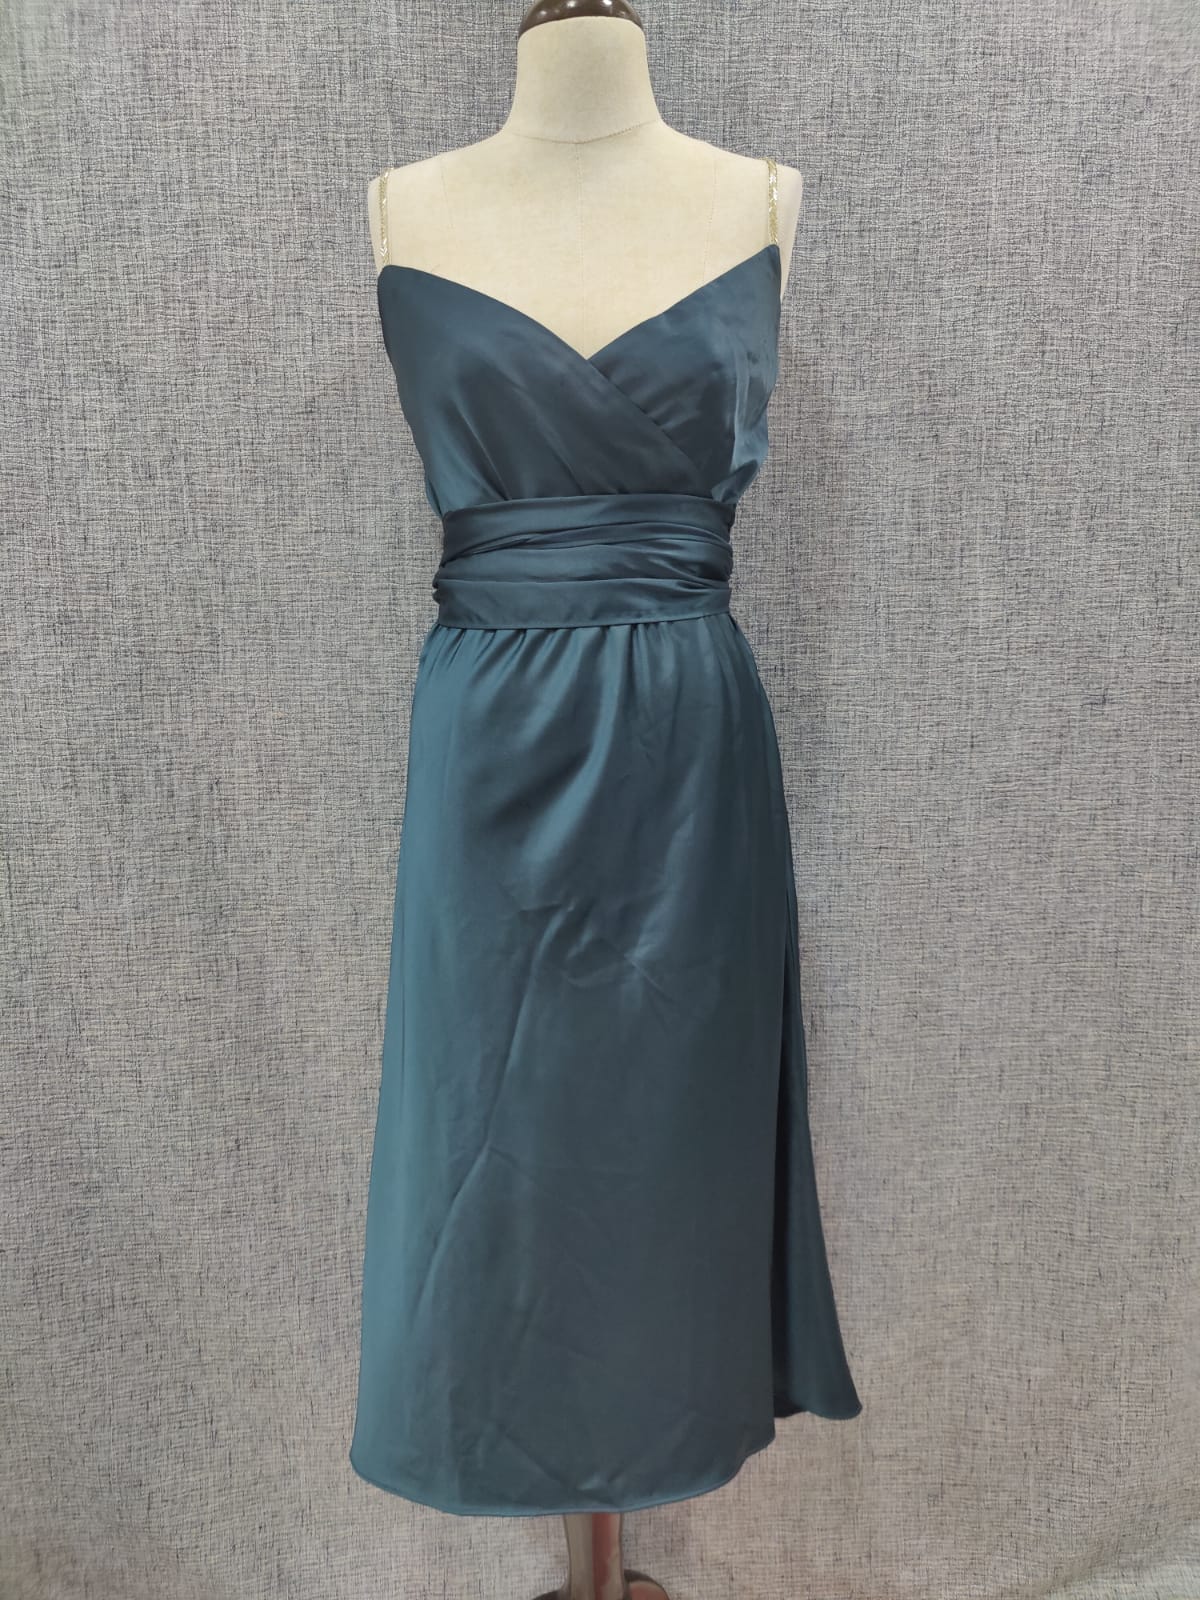 ZARA Metallic Dark Green Strap Dress | Relove